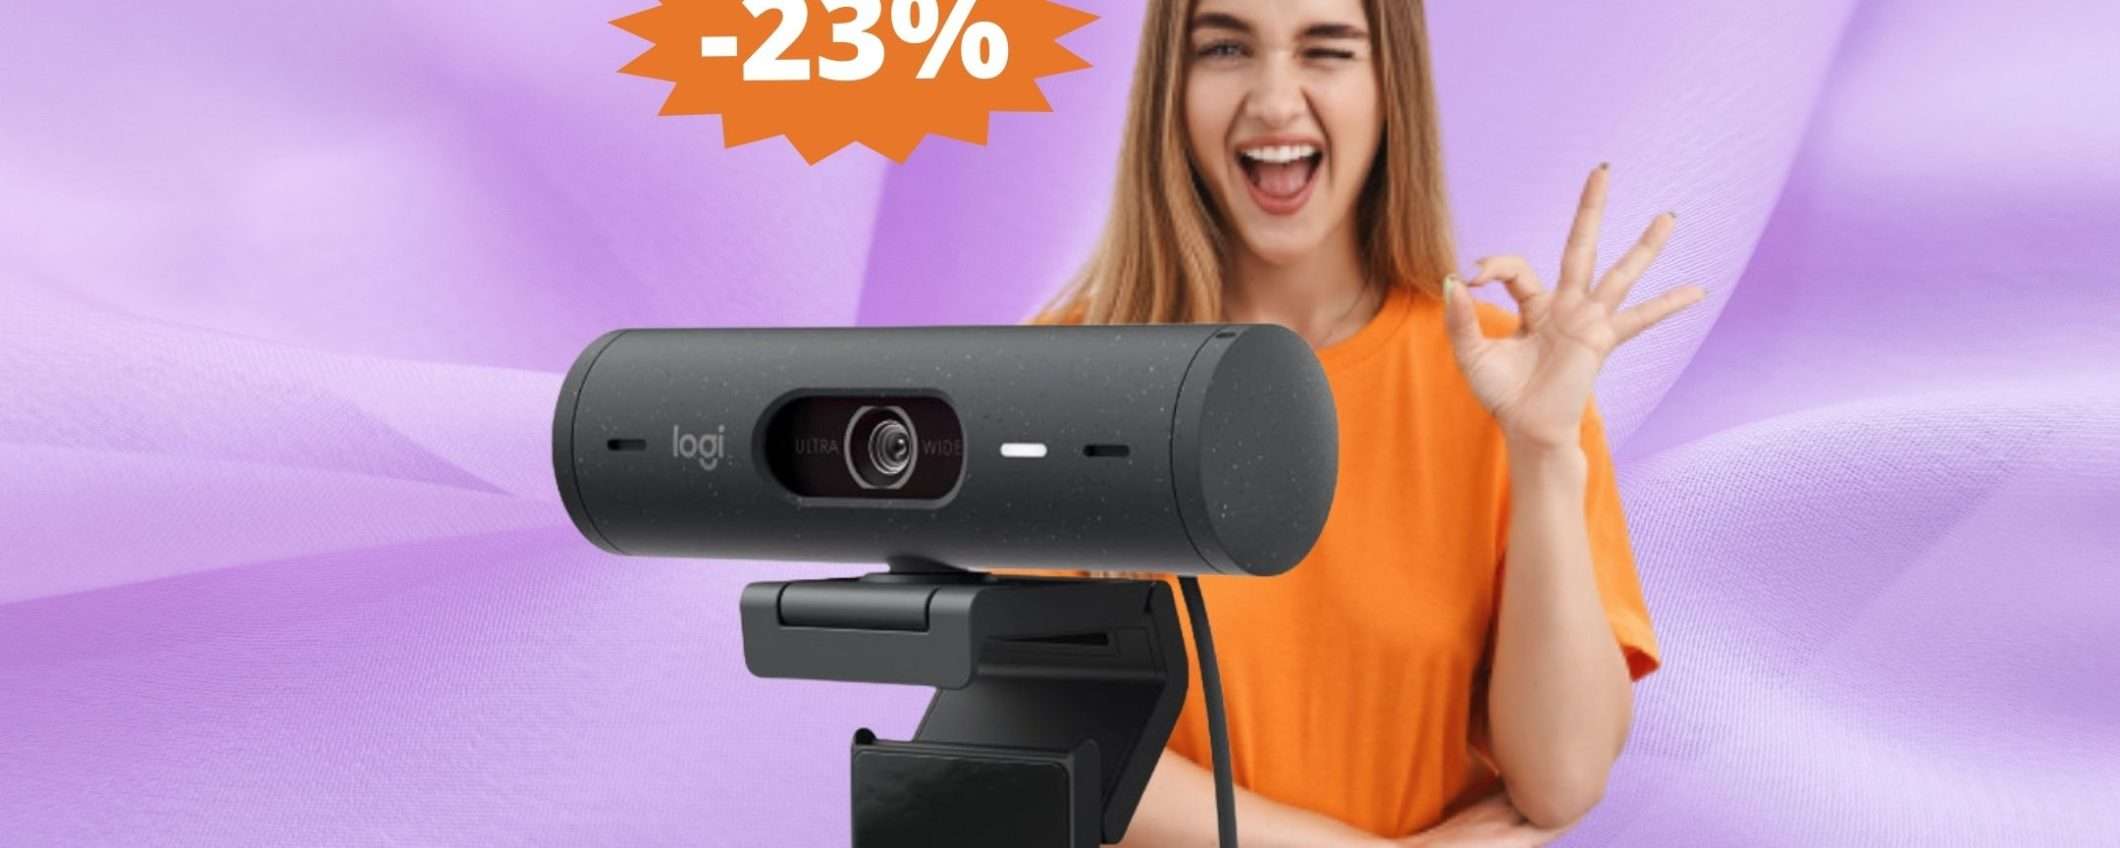 Webcam Logitech Brio 500: sconto IMPERDIBILE del 23%